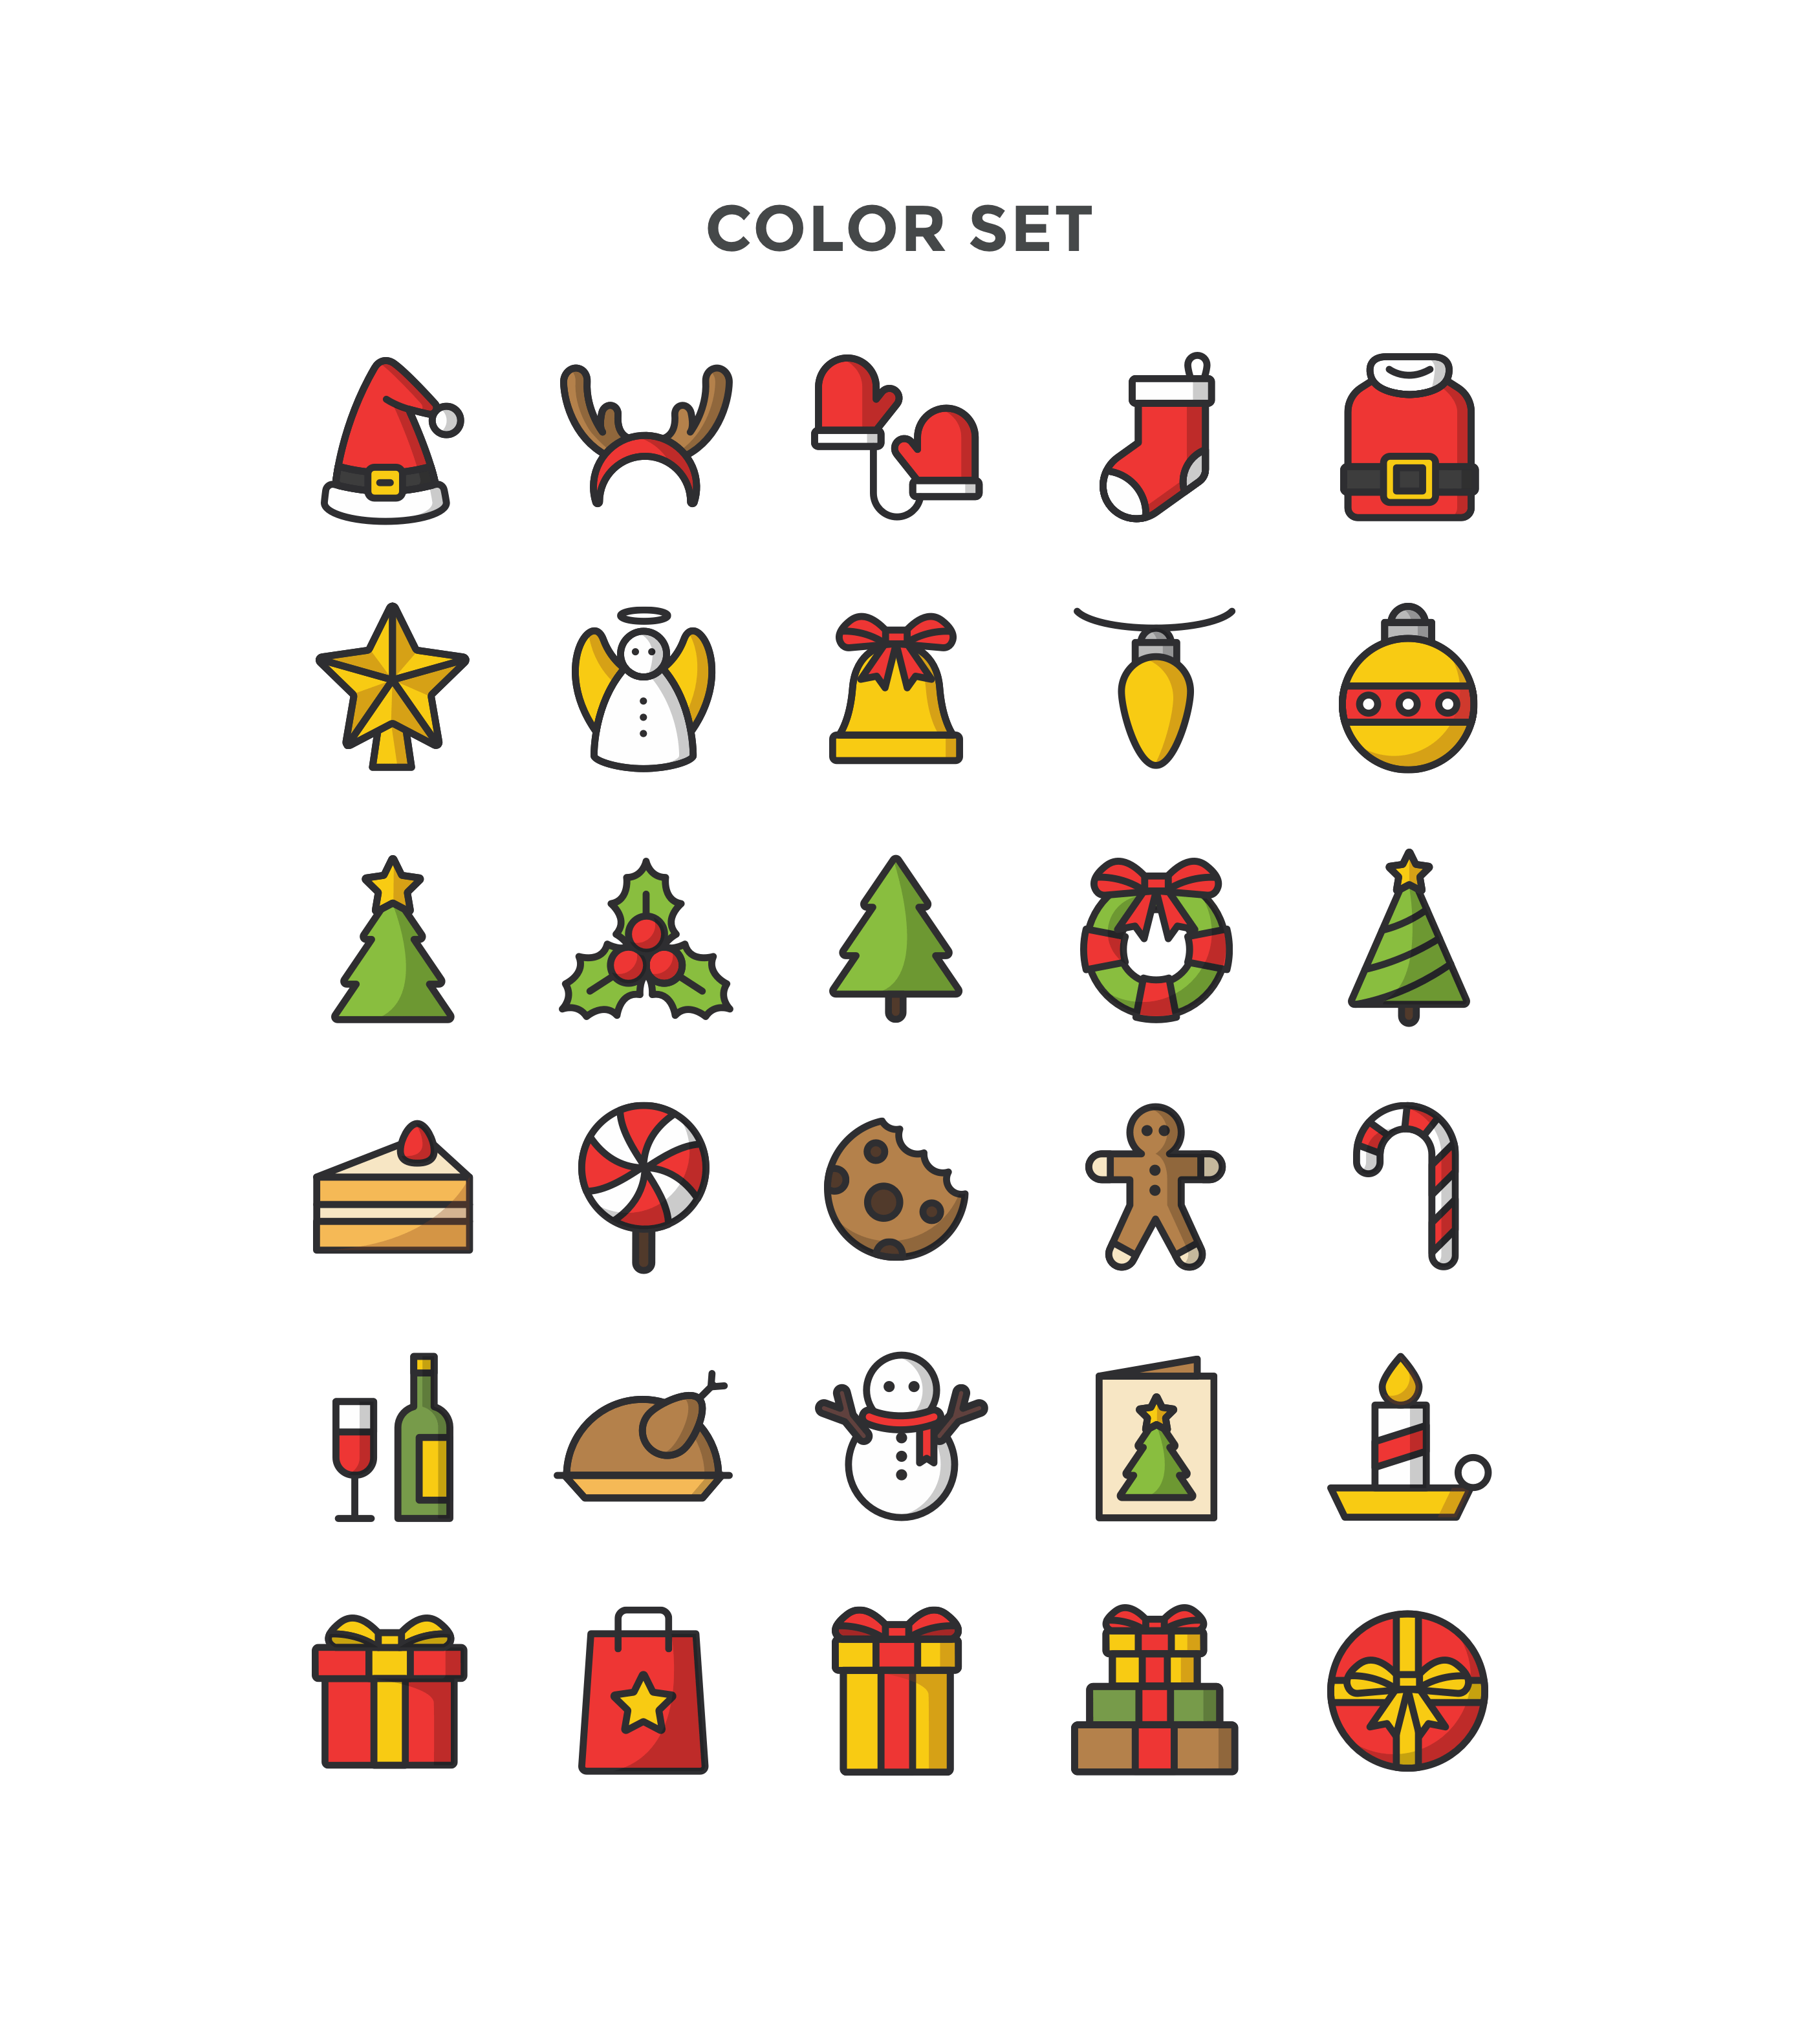 可爱矢量圣诞图标集 Free Christmas Icons插图(3)